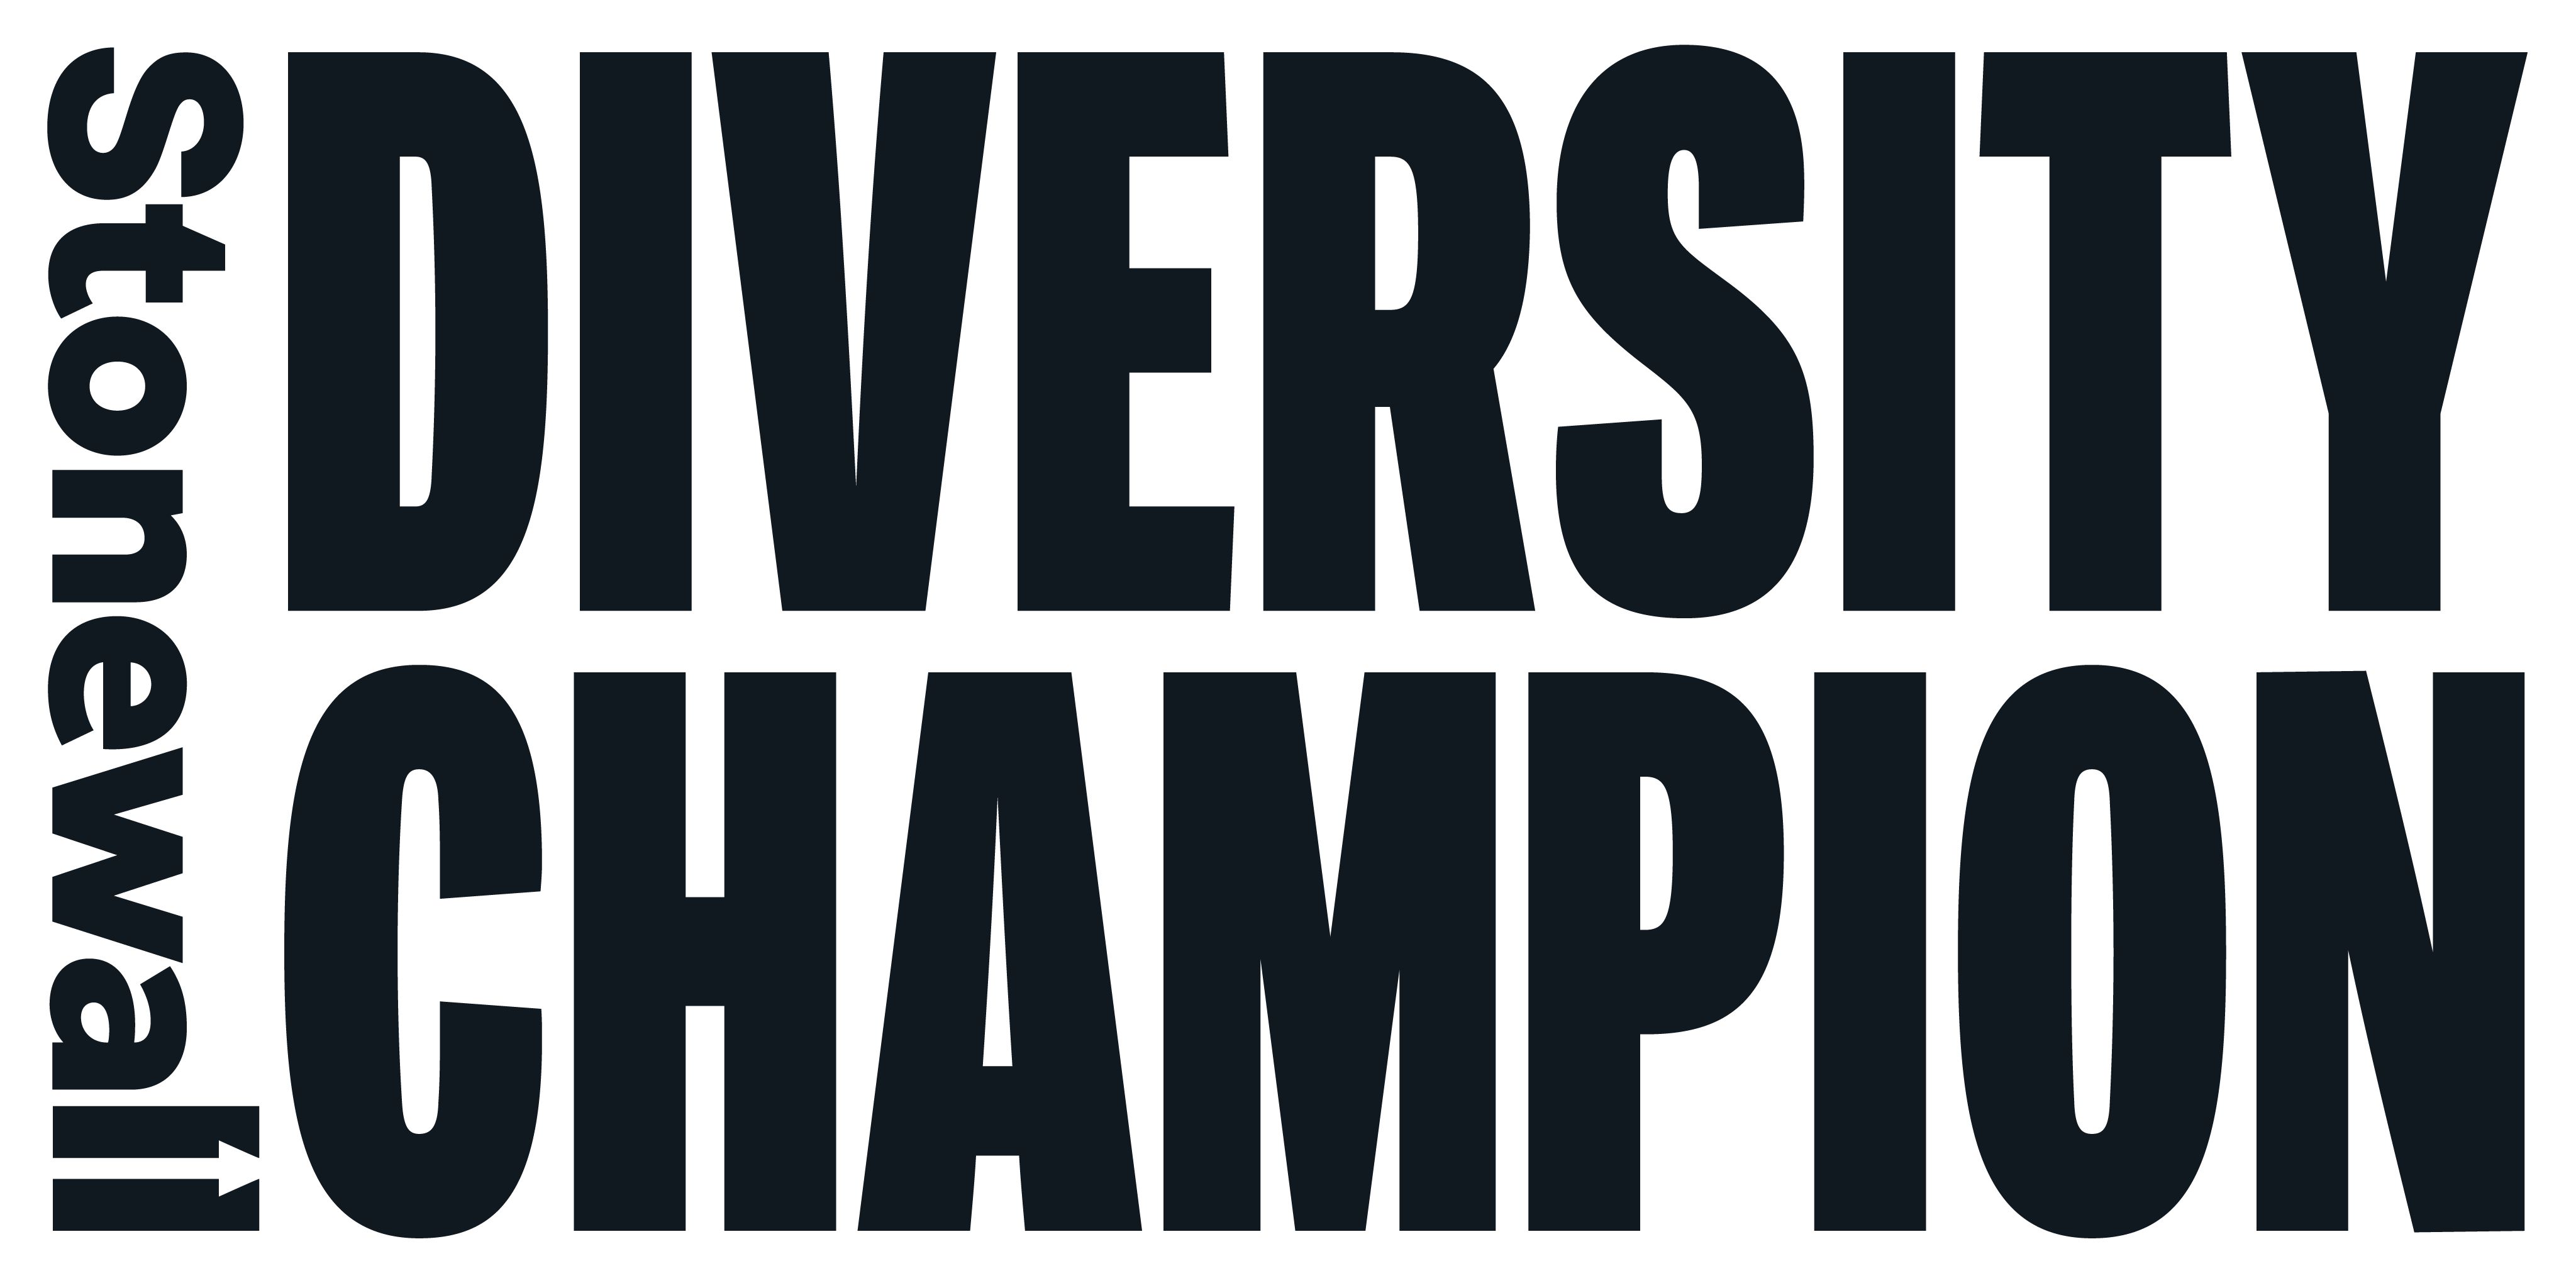 logo for Stonewall Diversity Champion Black partnership